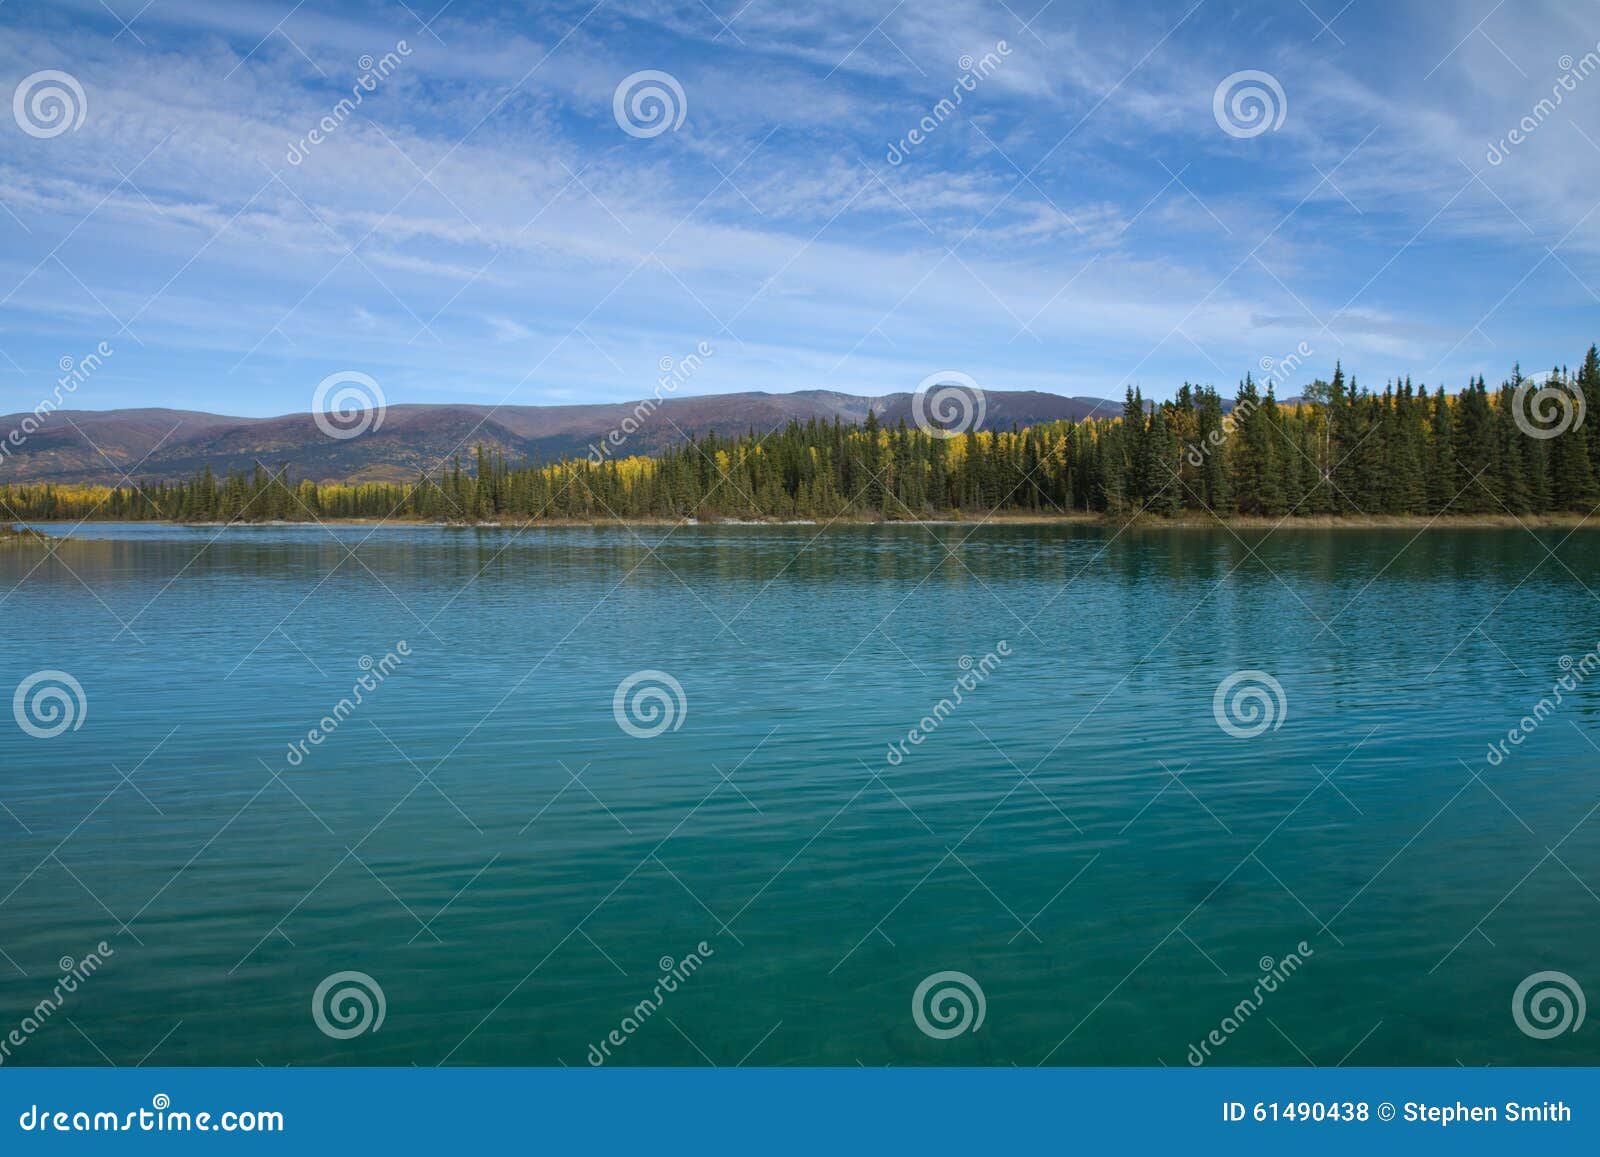 unreal water color and clarity at boya lake provincial park, bc